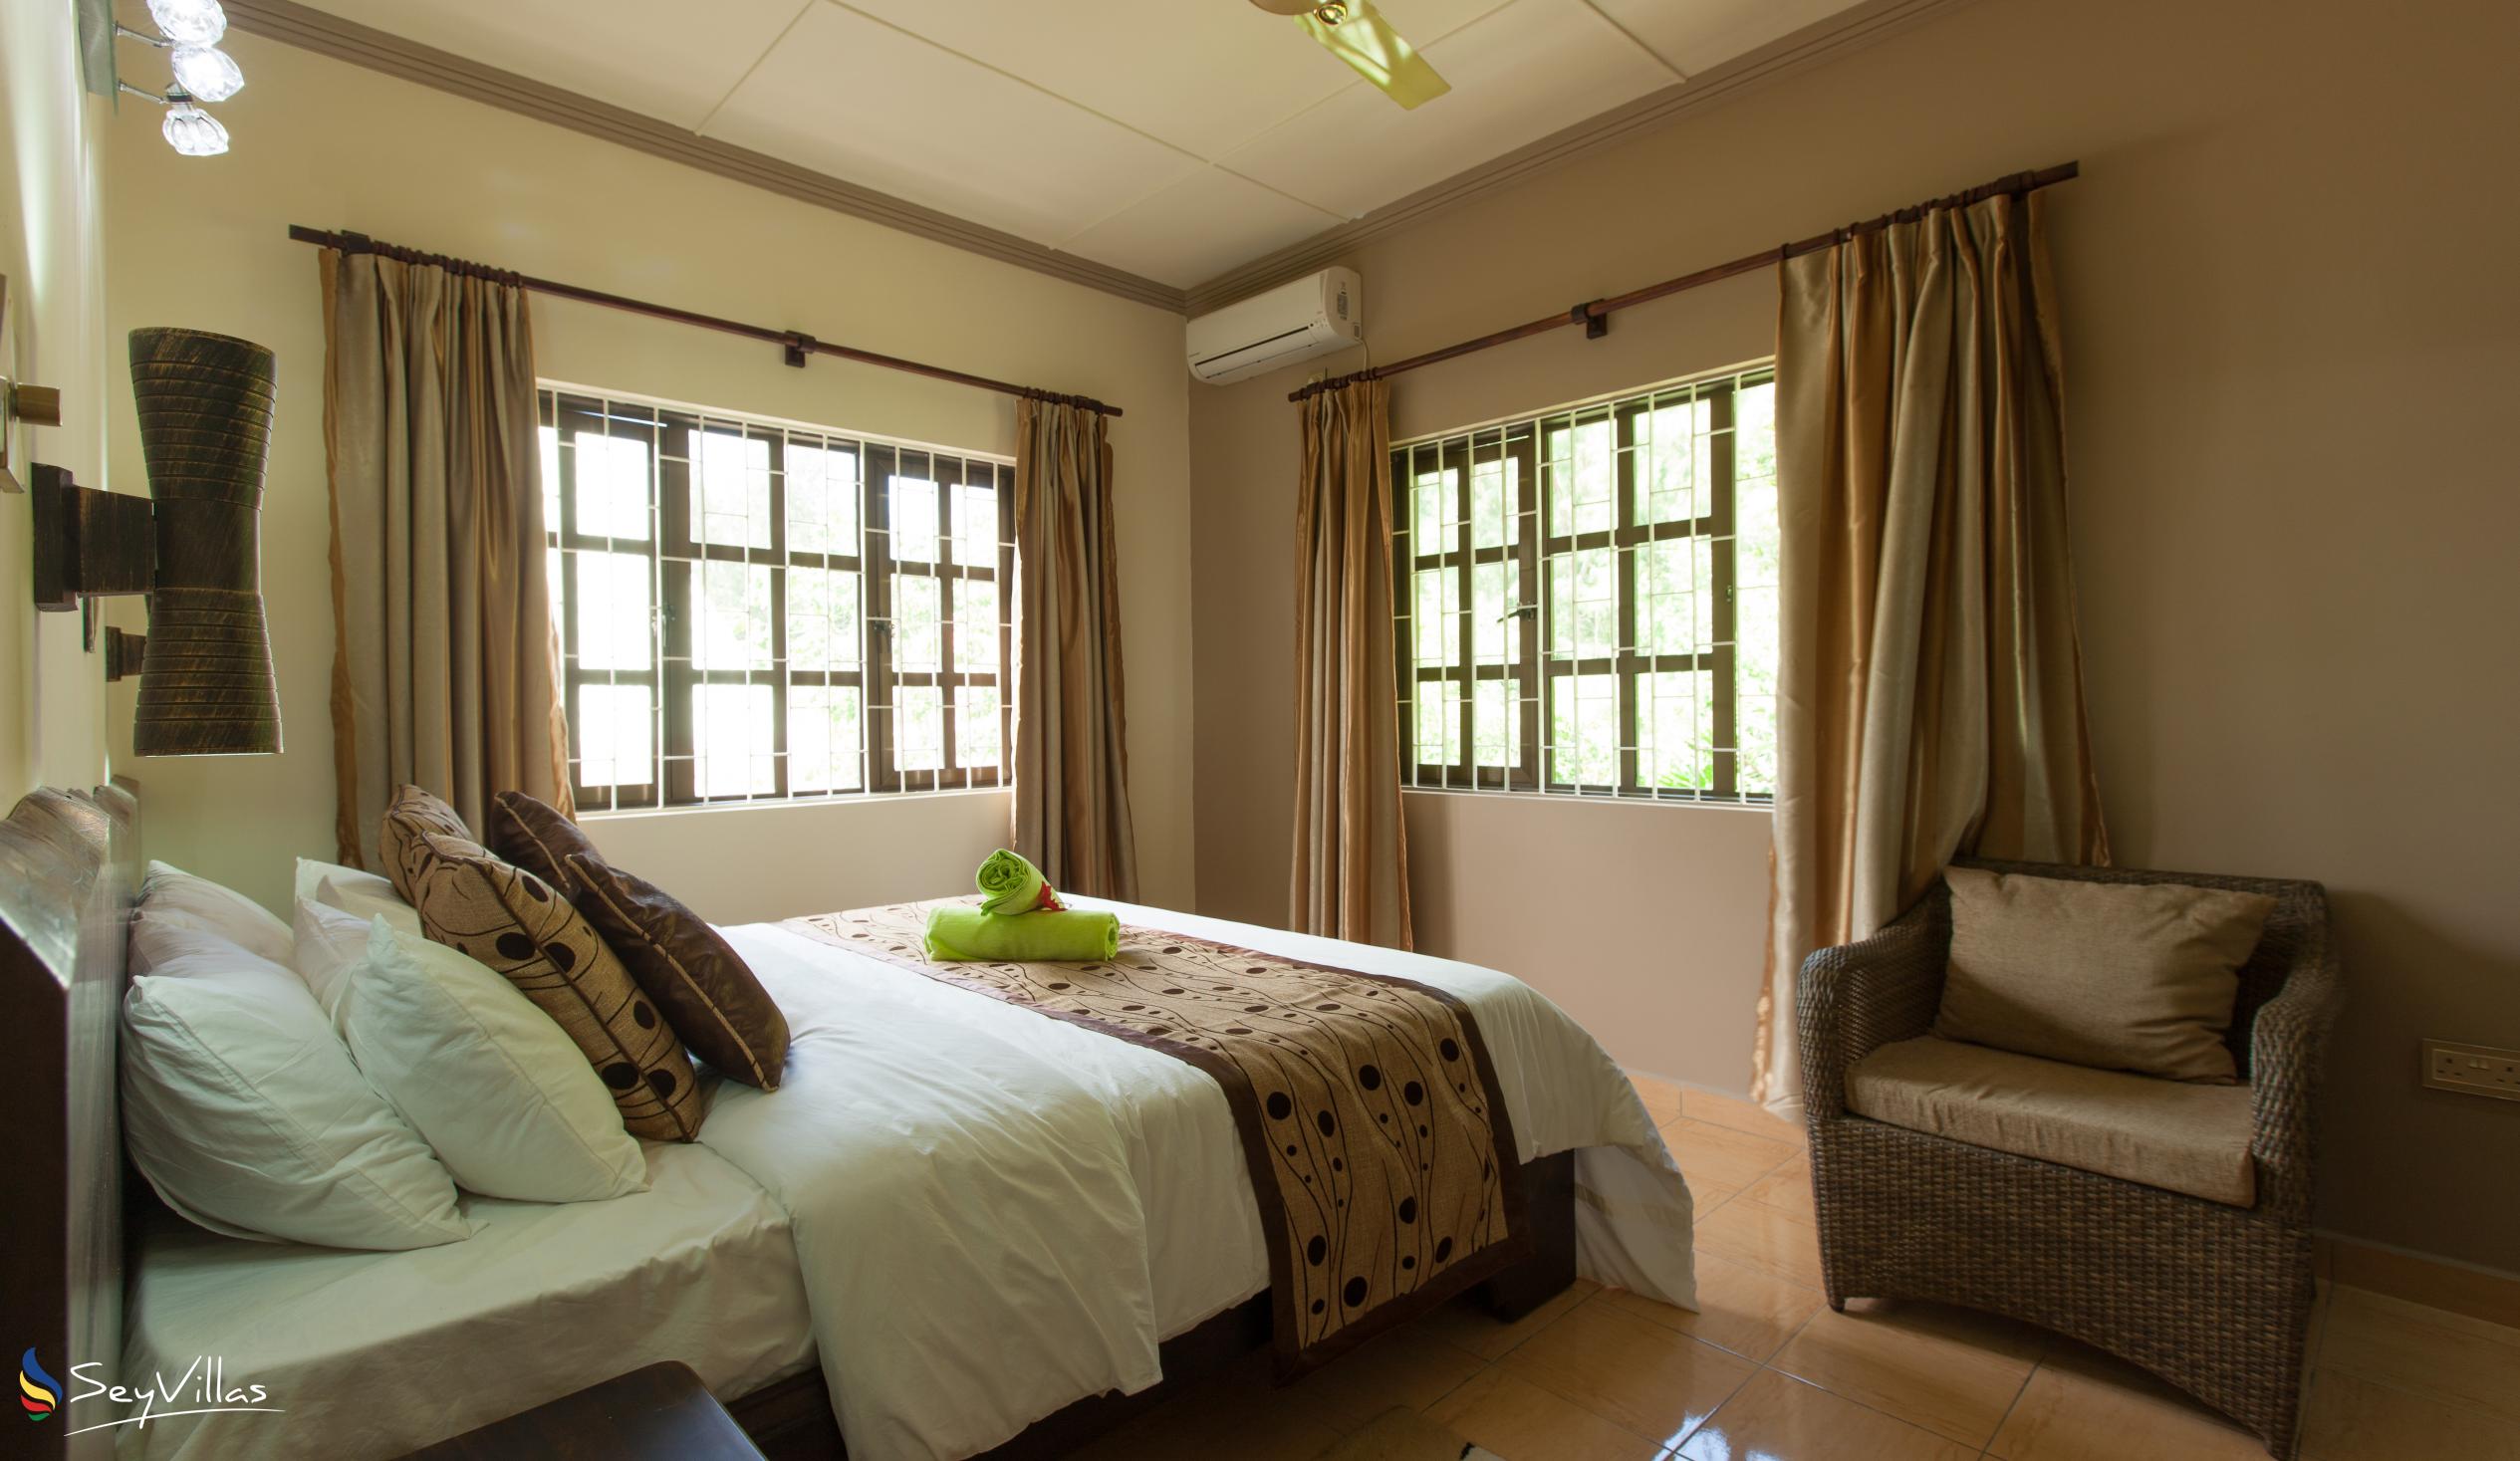 Photo 110: Chez Bea Villa - 1-Bedroom Apartment - Praslin (Seychelles)